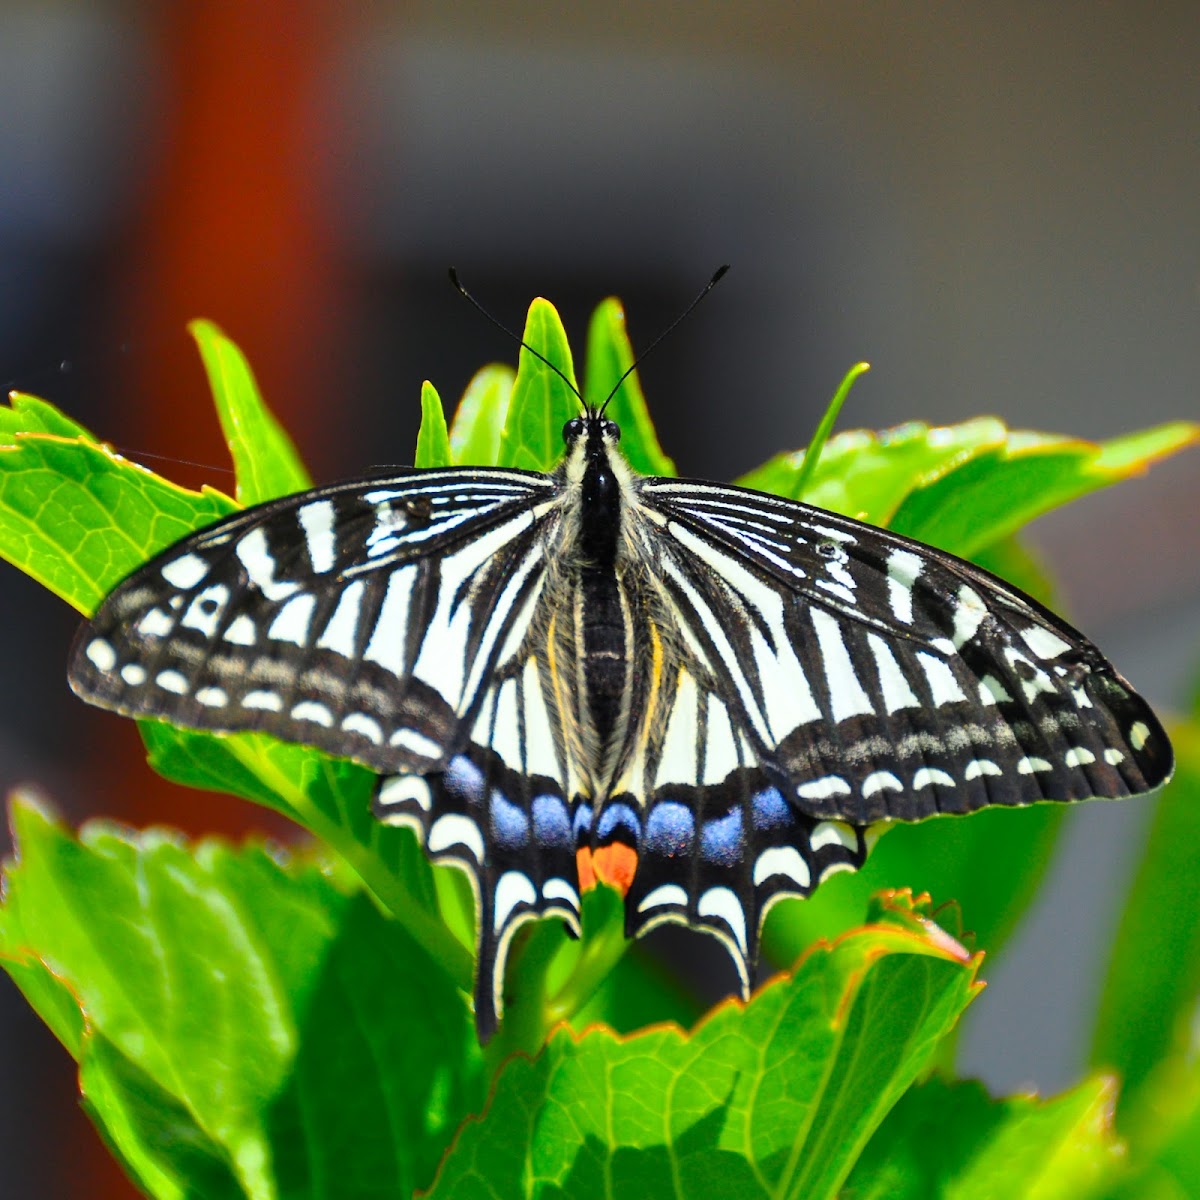 Asian swallowtail